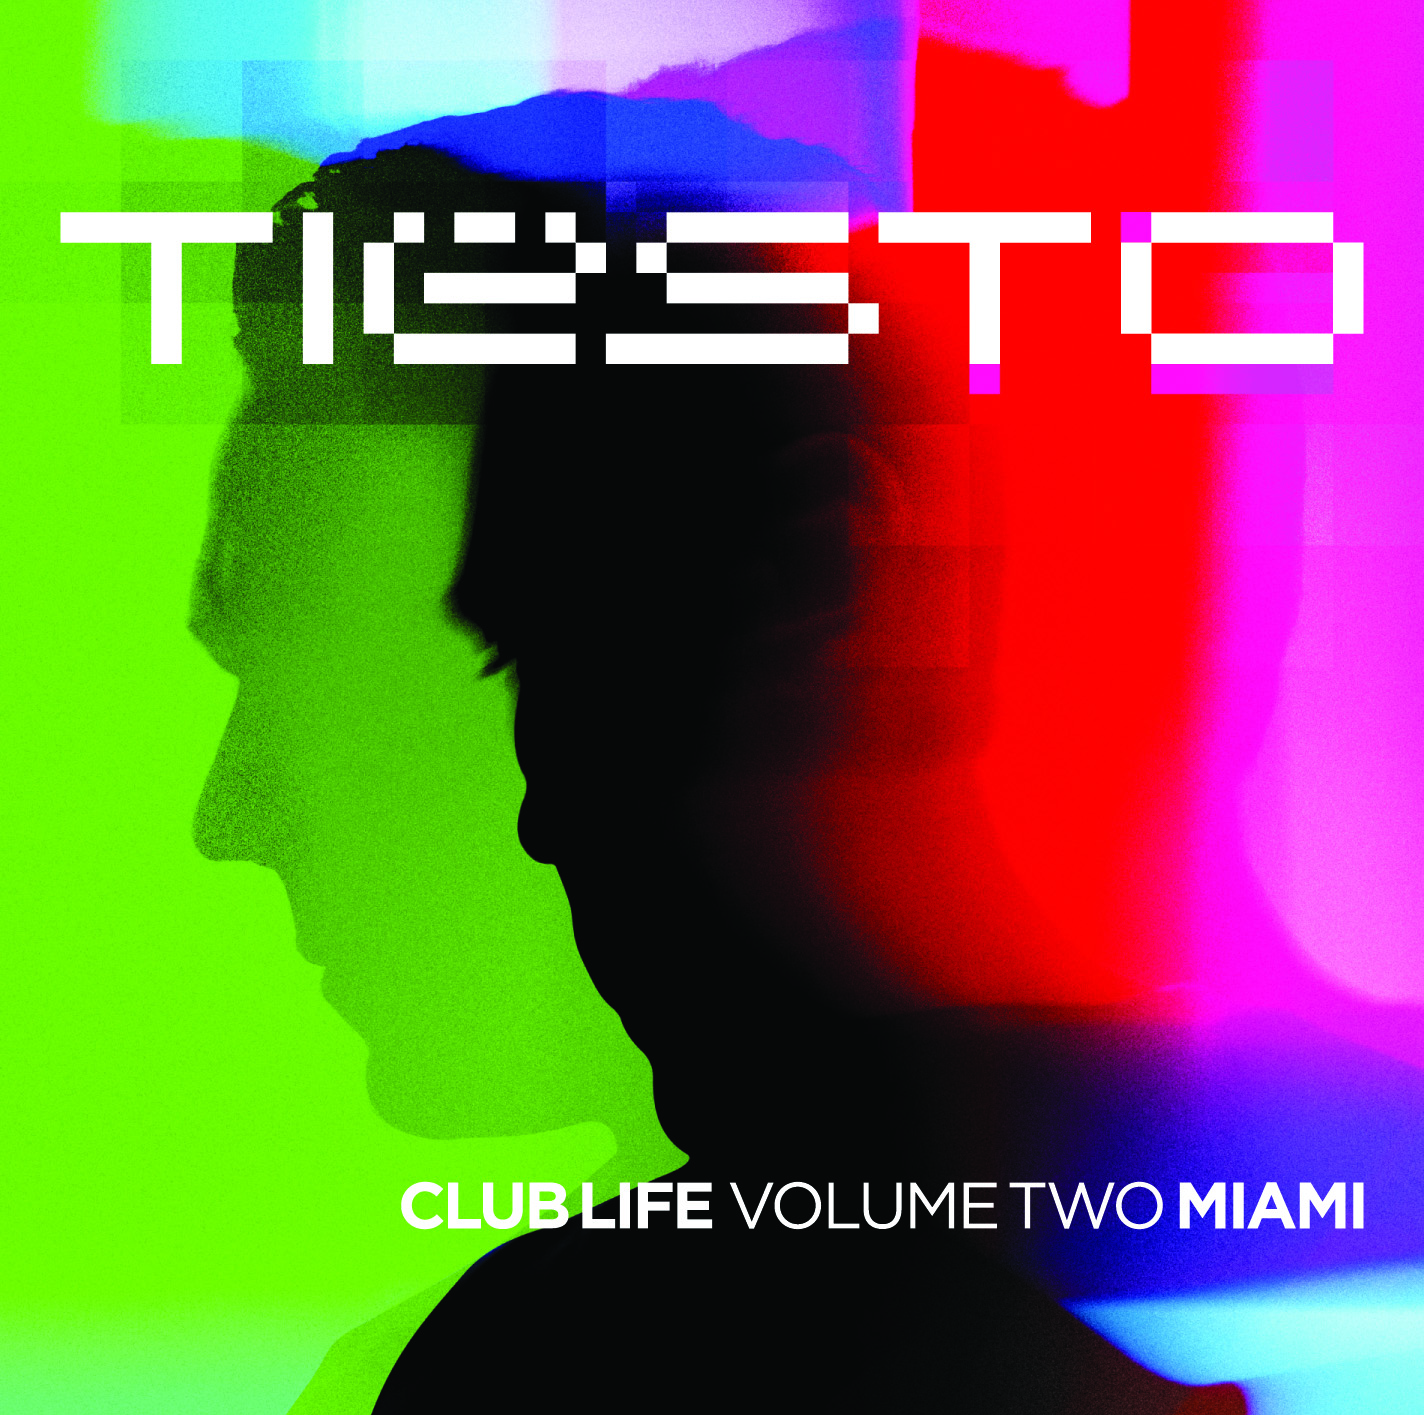 Tiësto’s New Album “Club Life Vol. 2 Miami” Is Now On iTunes!